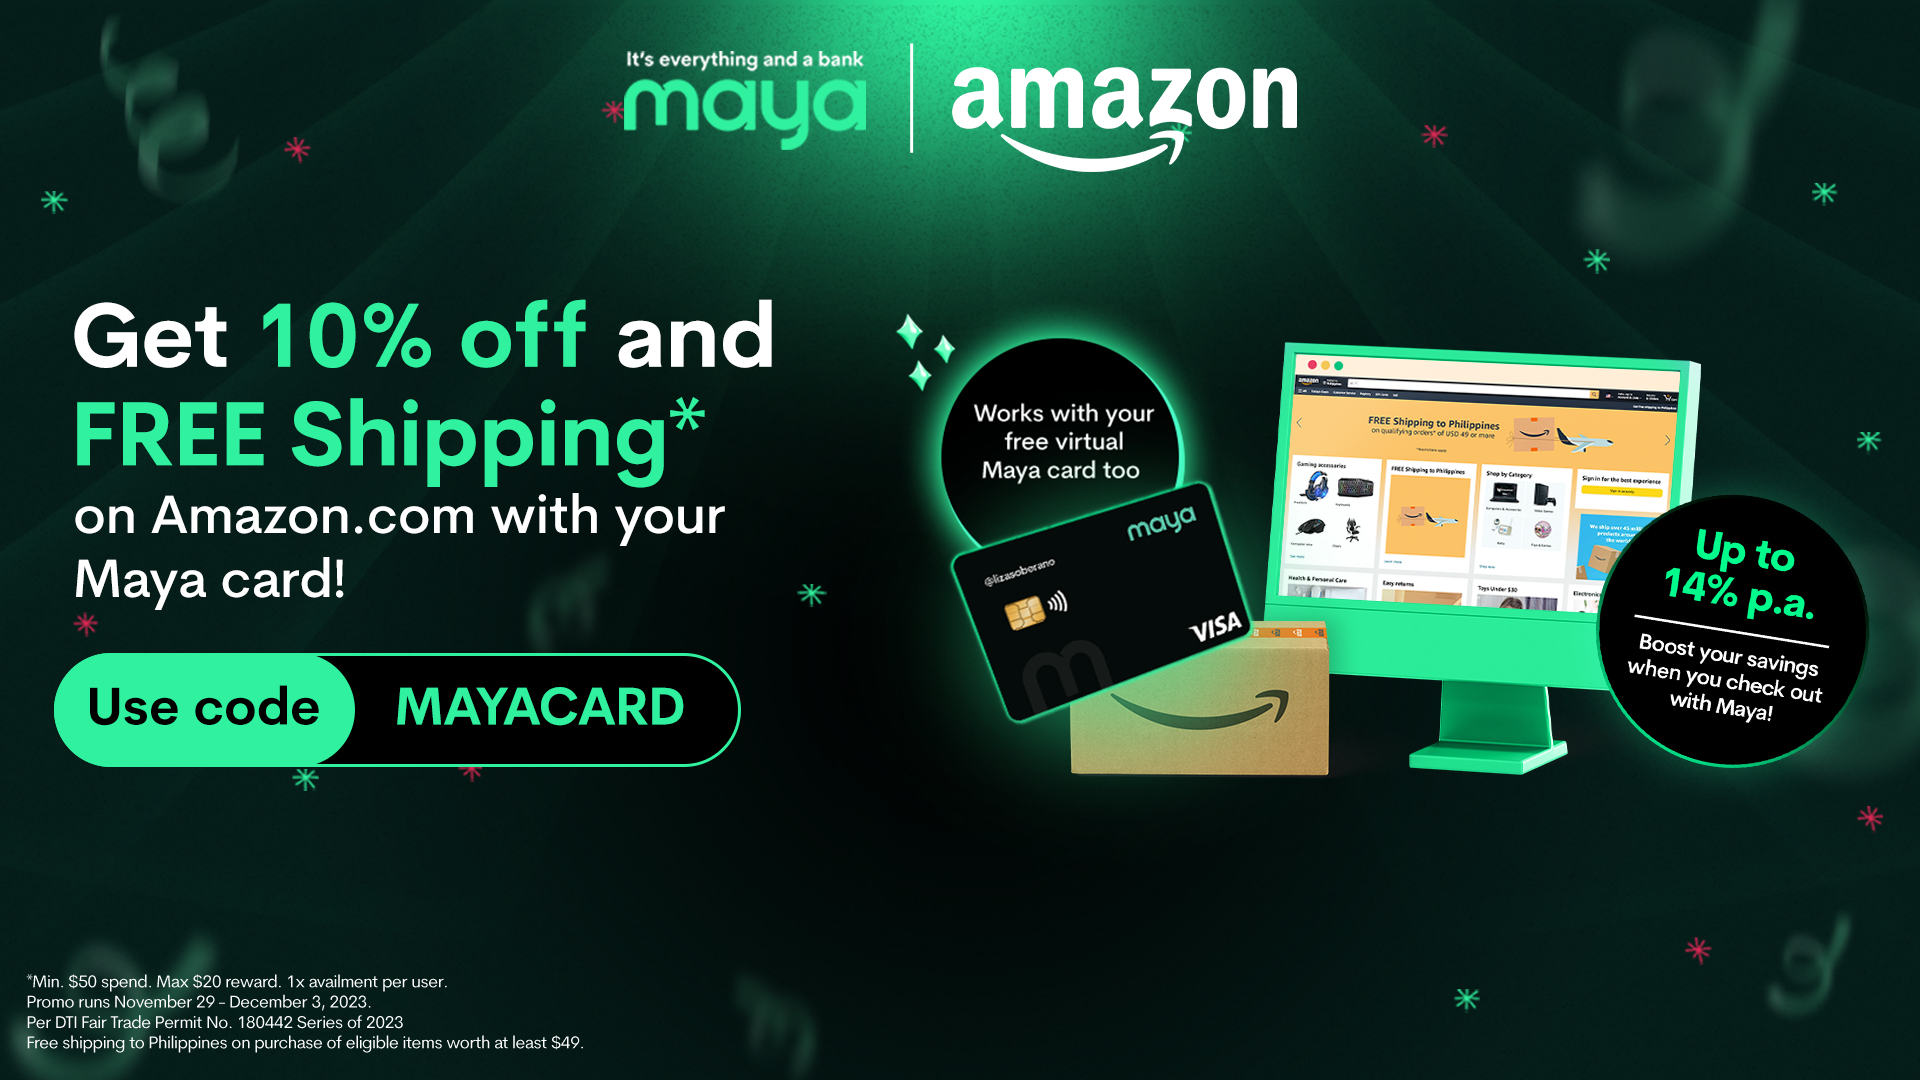 112323_Maya-NL_-Amazon-Maya-specific-11.11-money-day_Deals-Page